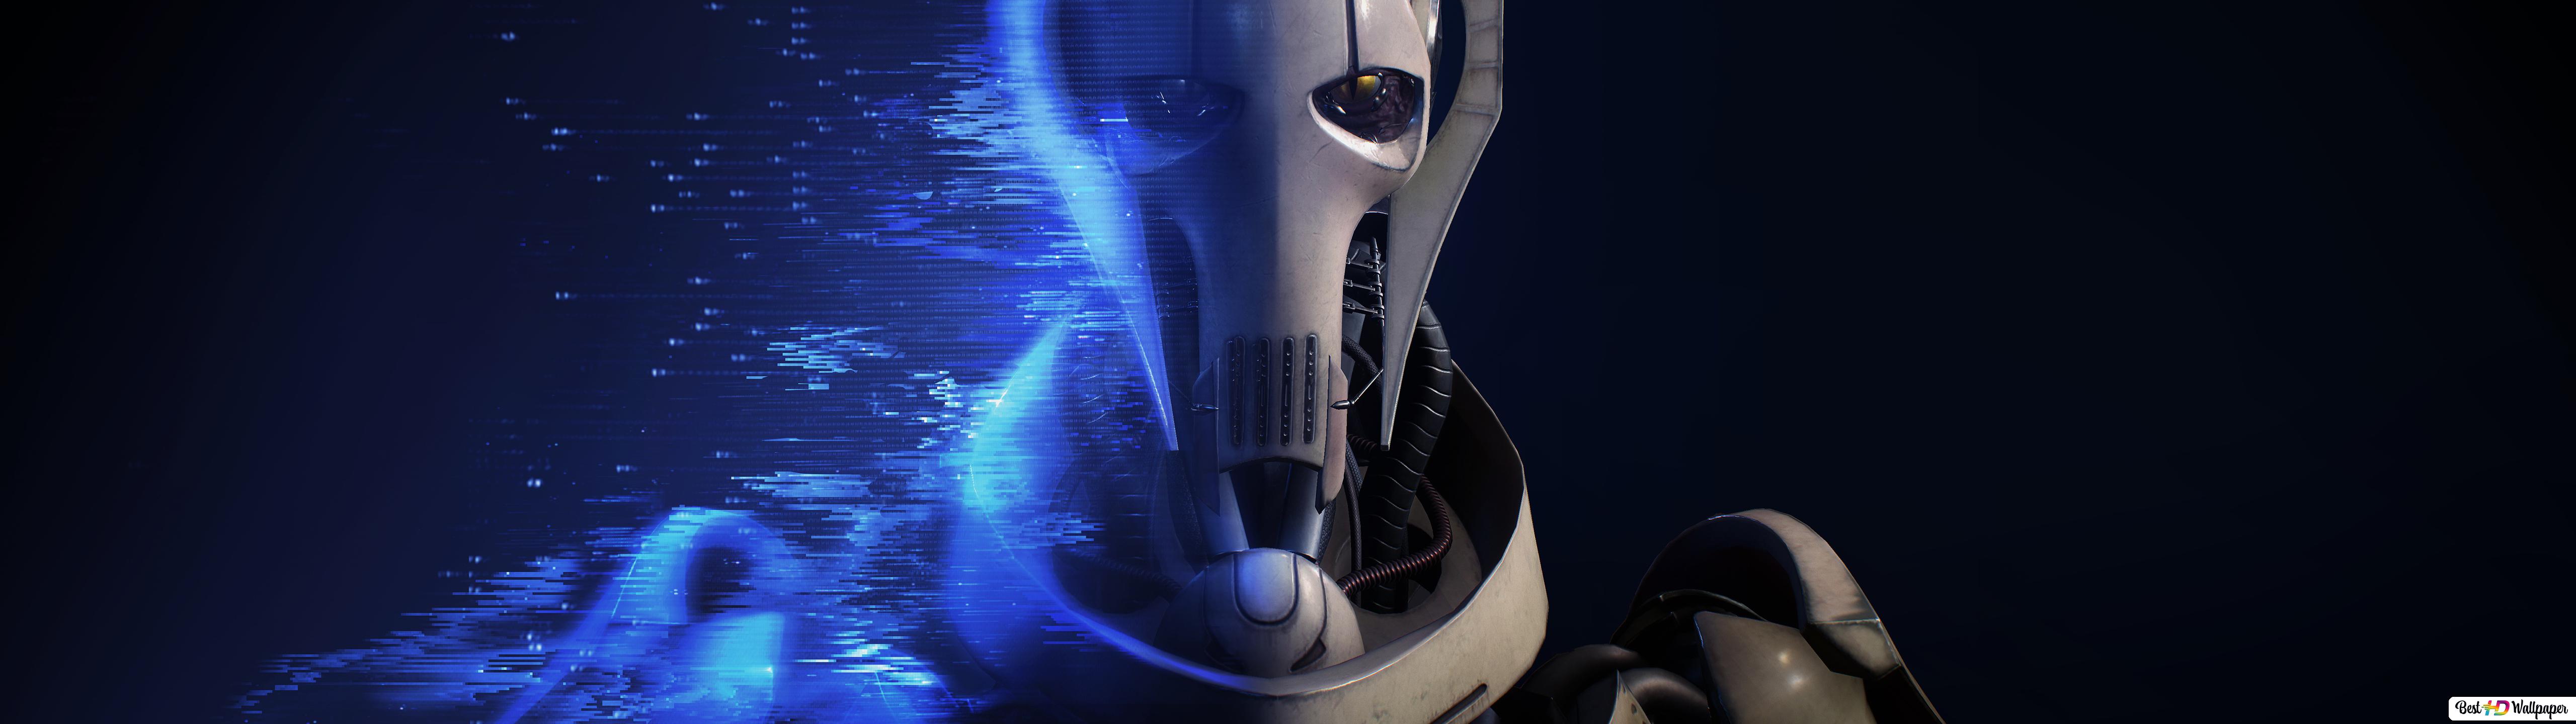 Star Wars: Battlefront 2 game trooper (Grievous) HD wallpaper download